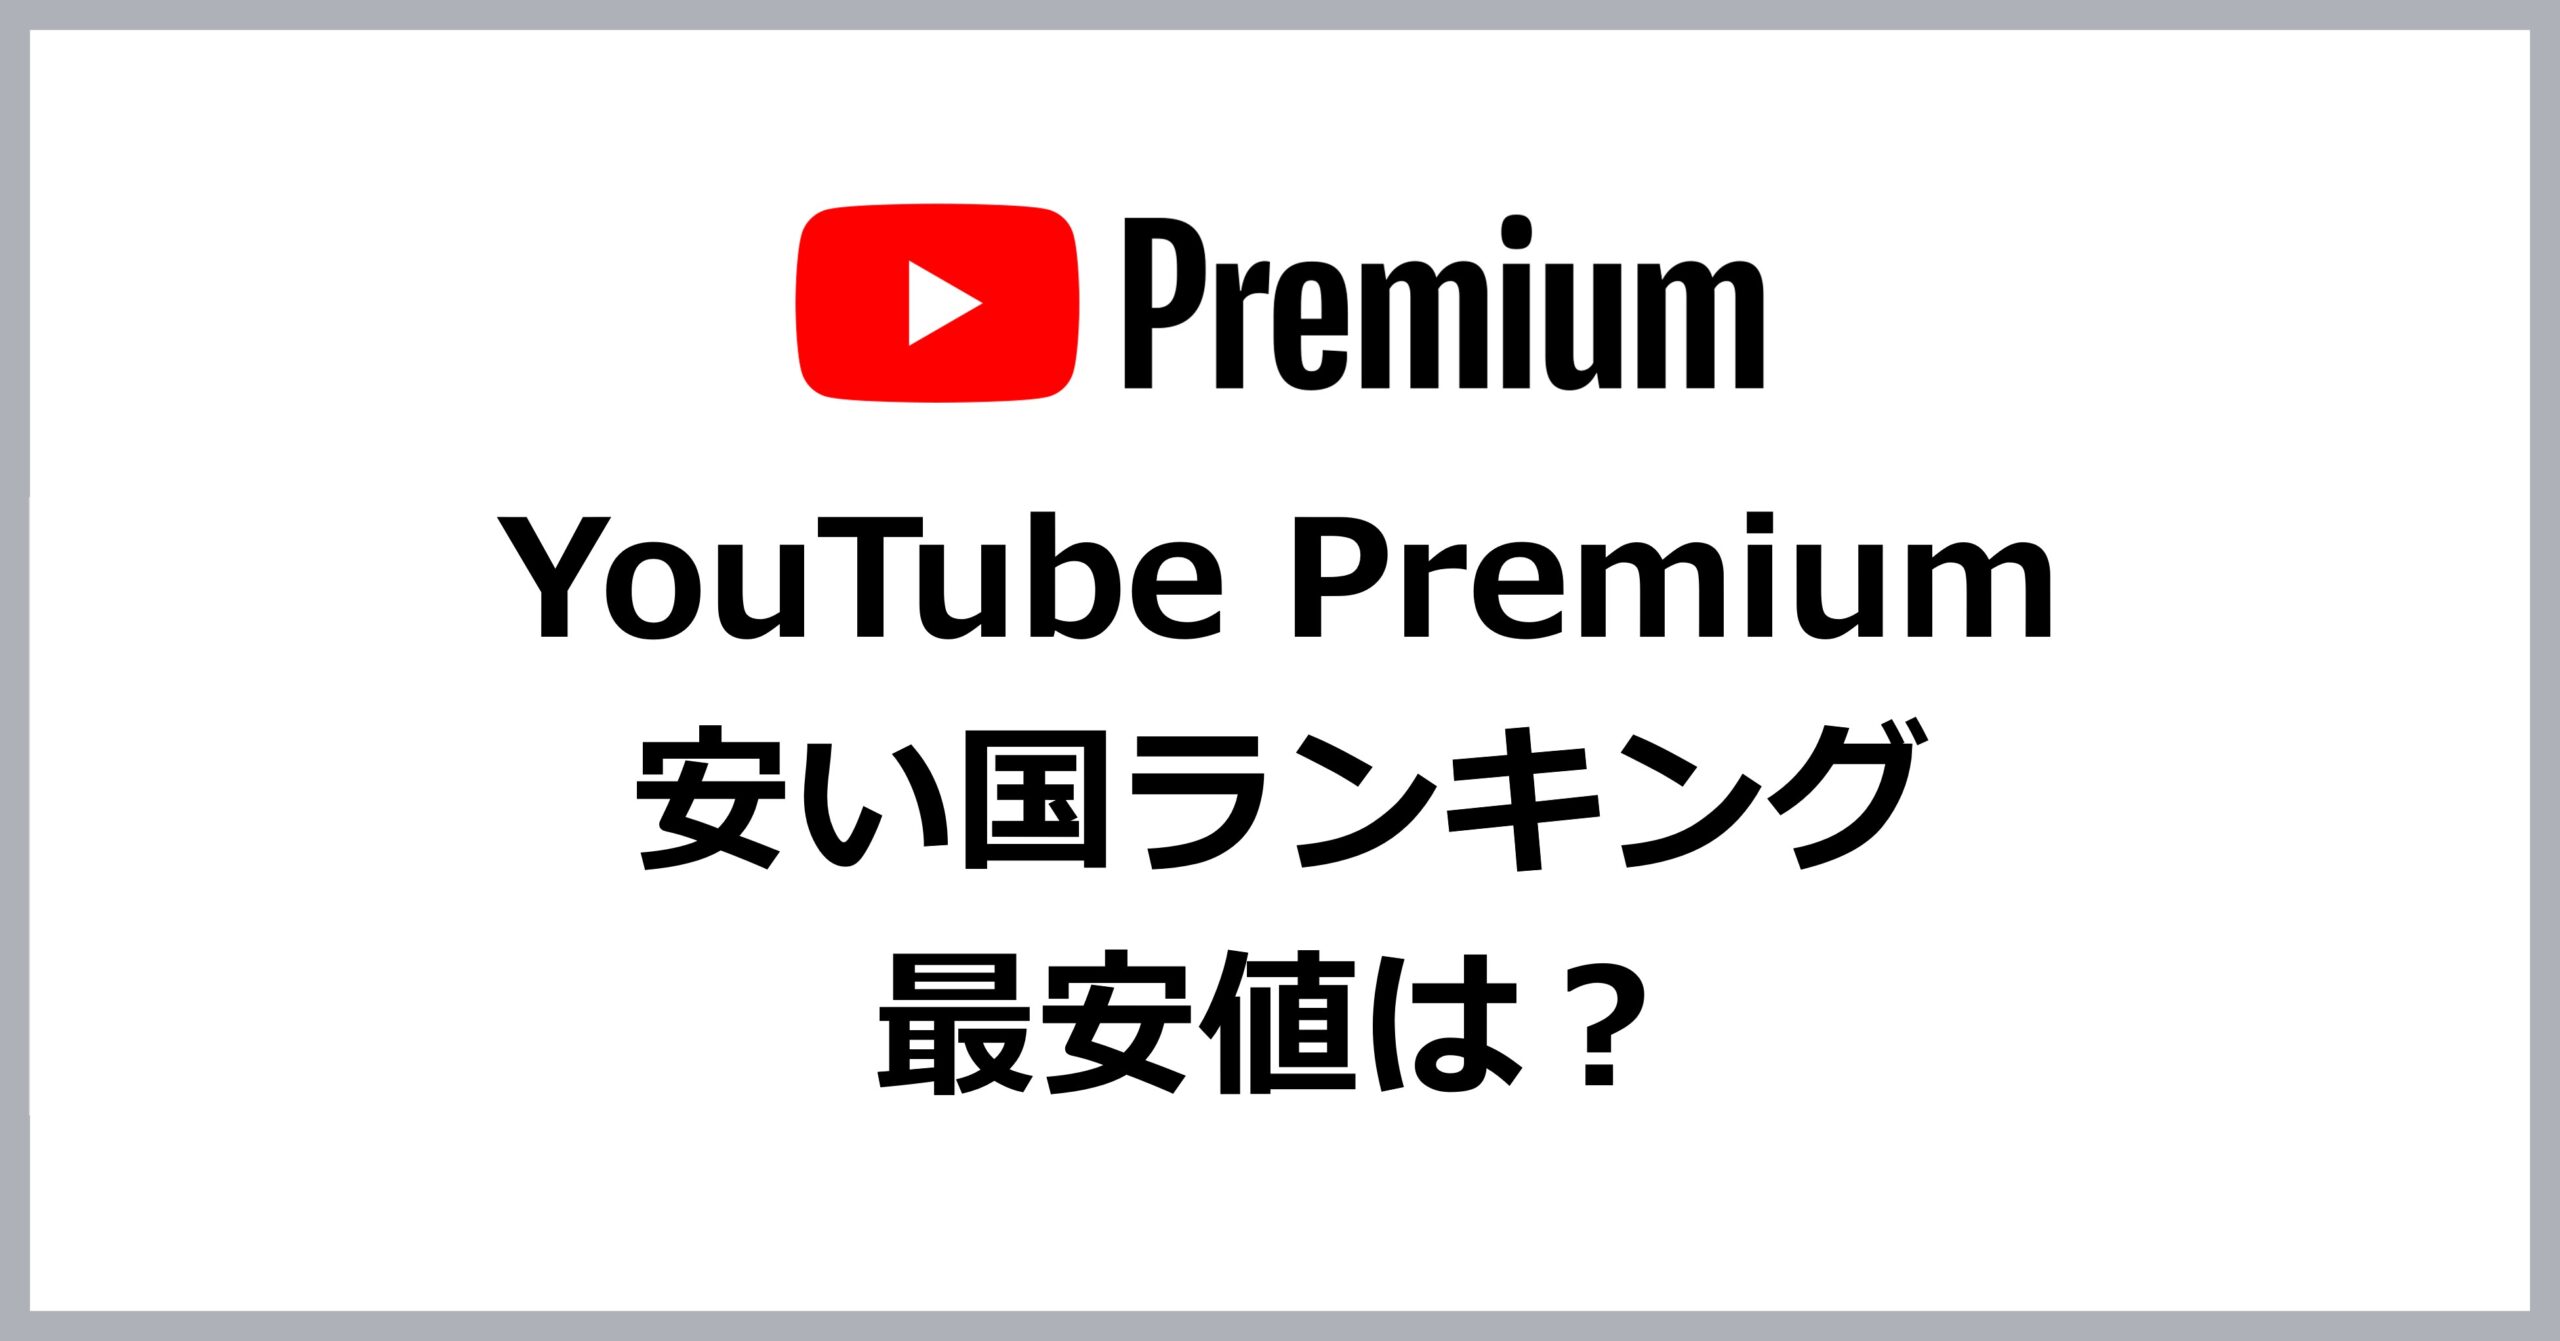 YouTube Premium安い国ランキング